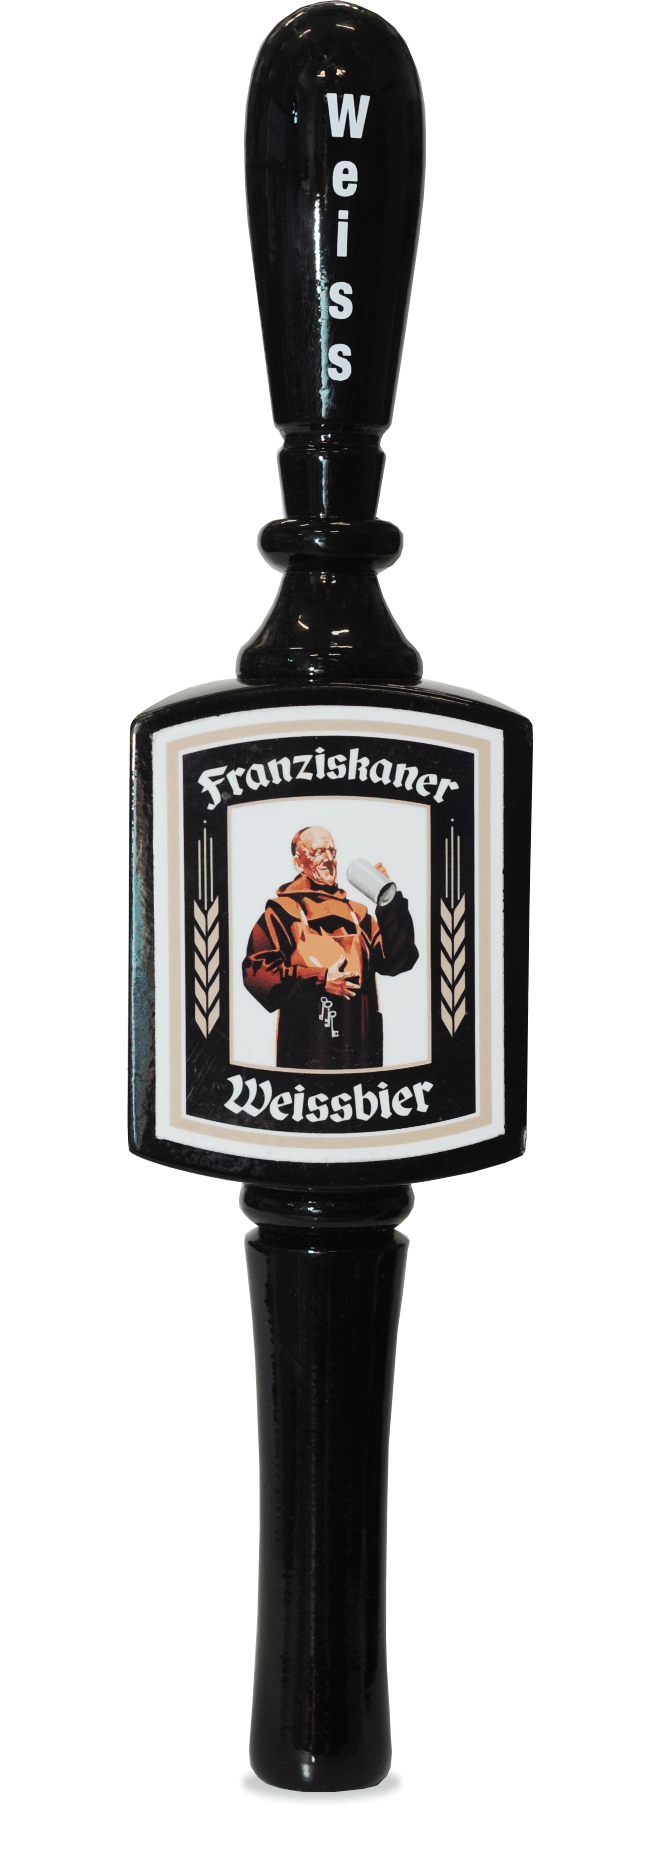 Franziskaner has a beverage tapper!